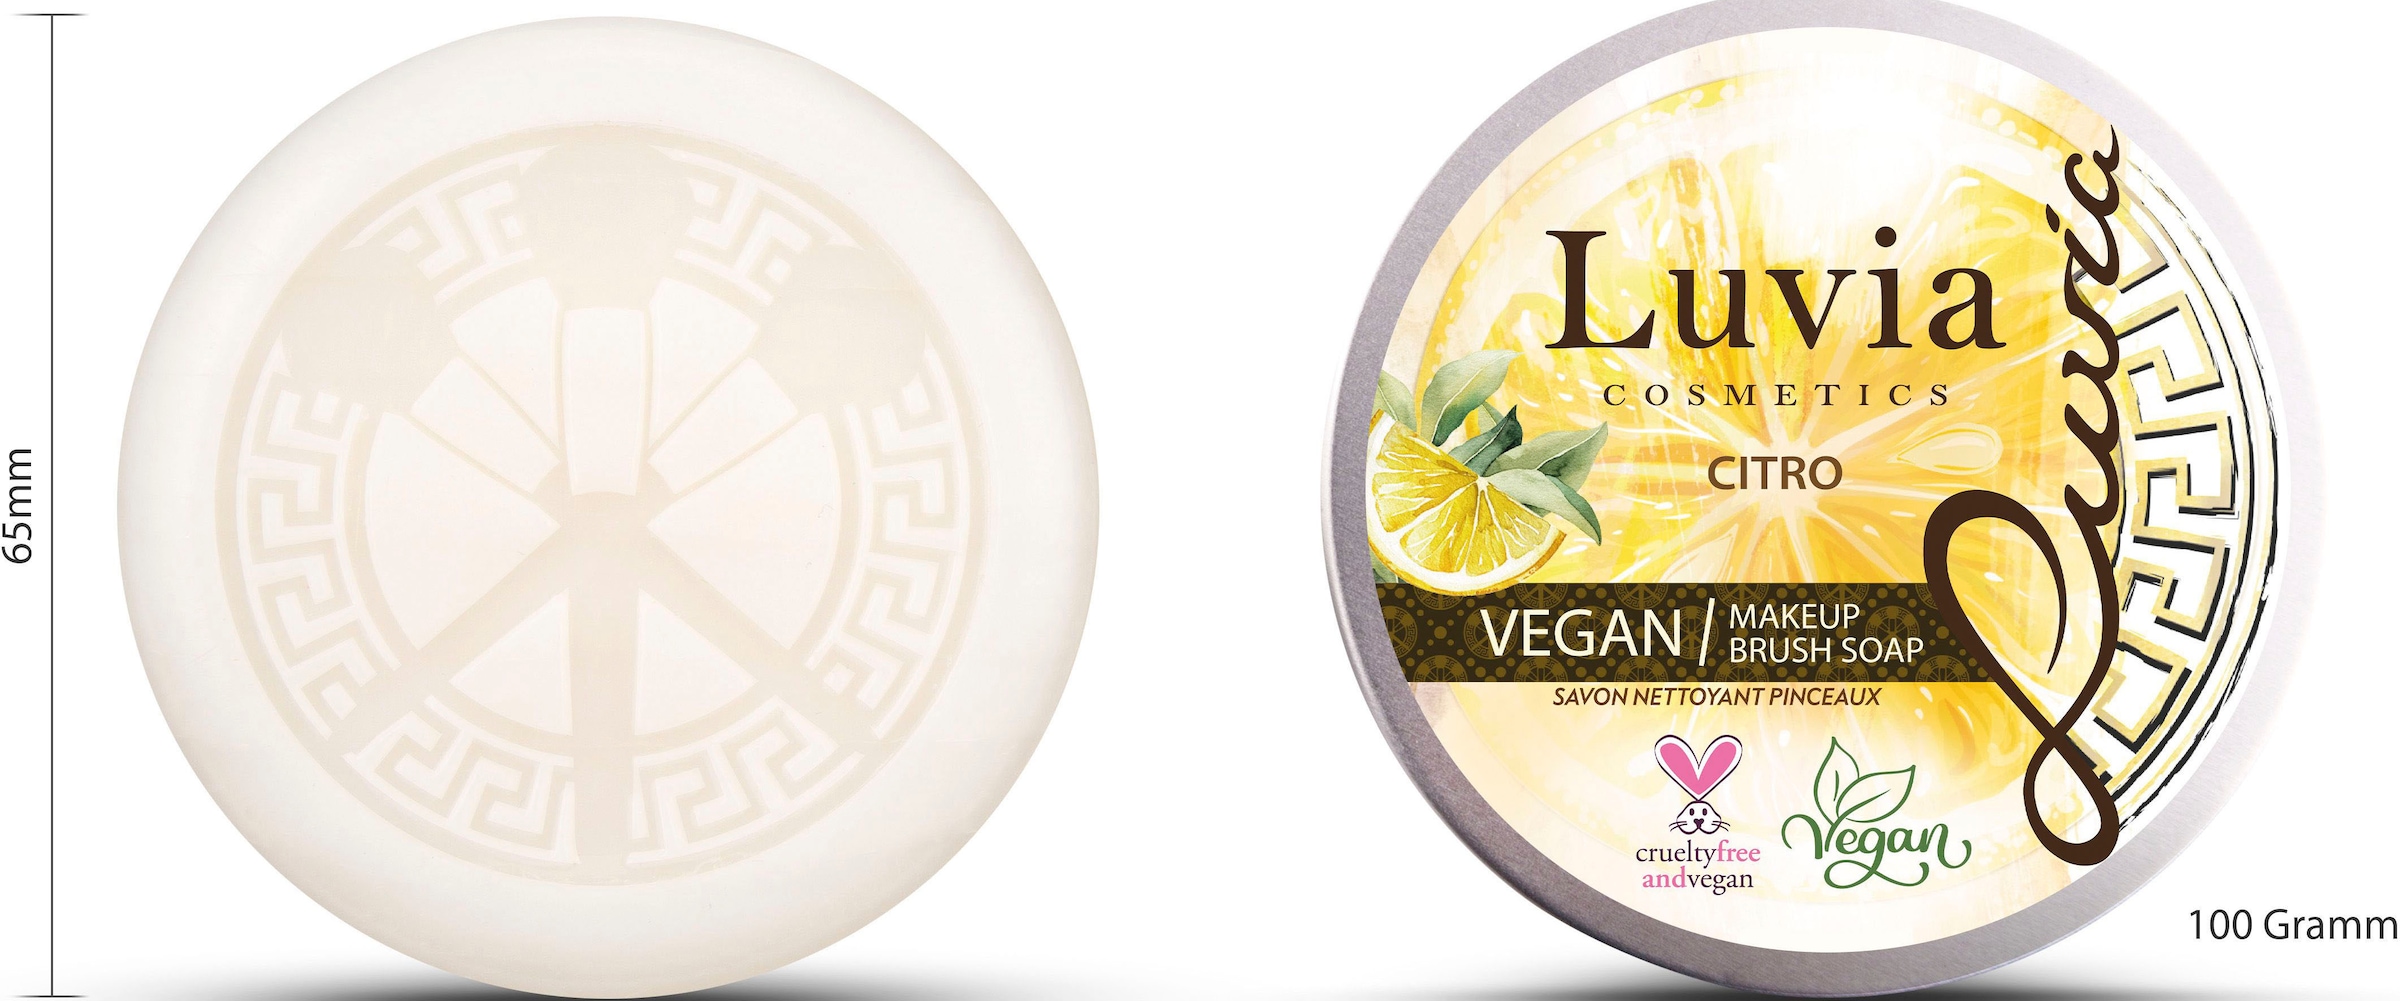 Pinselseife Soap« Luvia Cosmetics »The vegan Brush Essential